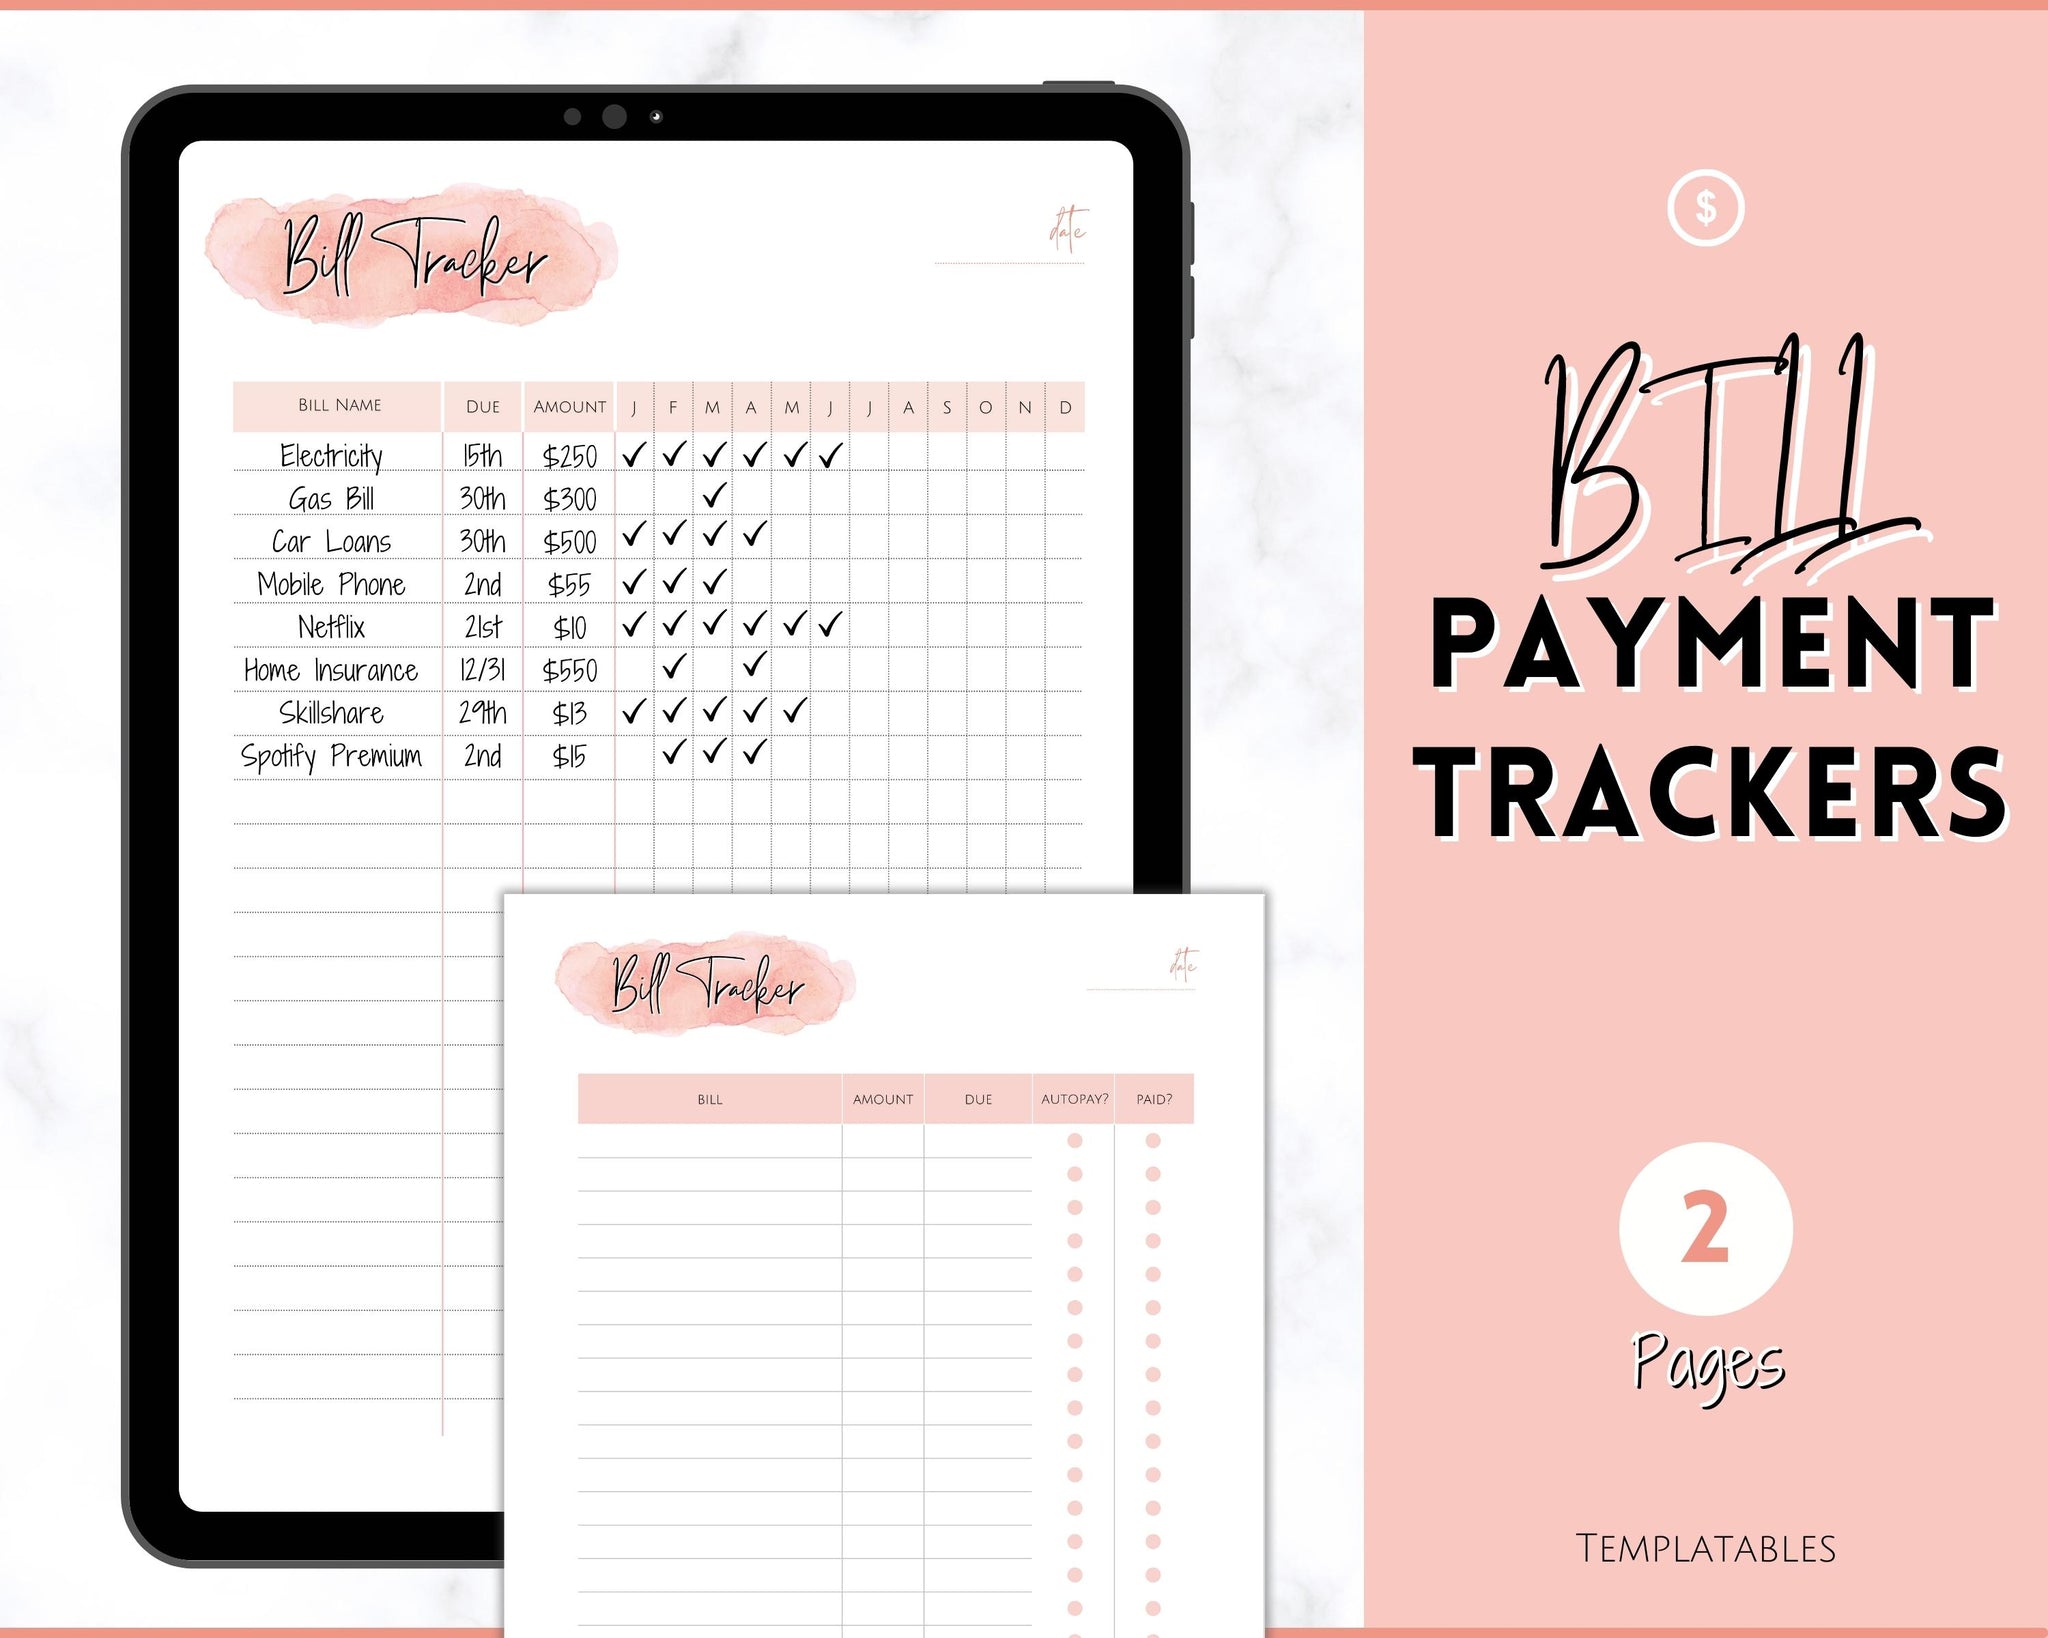 Monthly Bill Tracker Printable Digital Bill Organizer Bill Payment Budget  Planner 